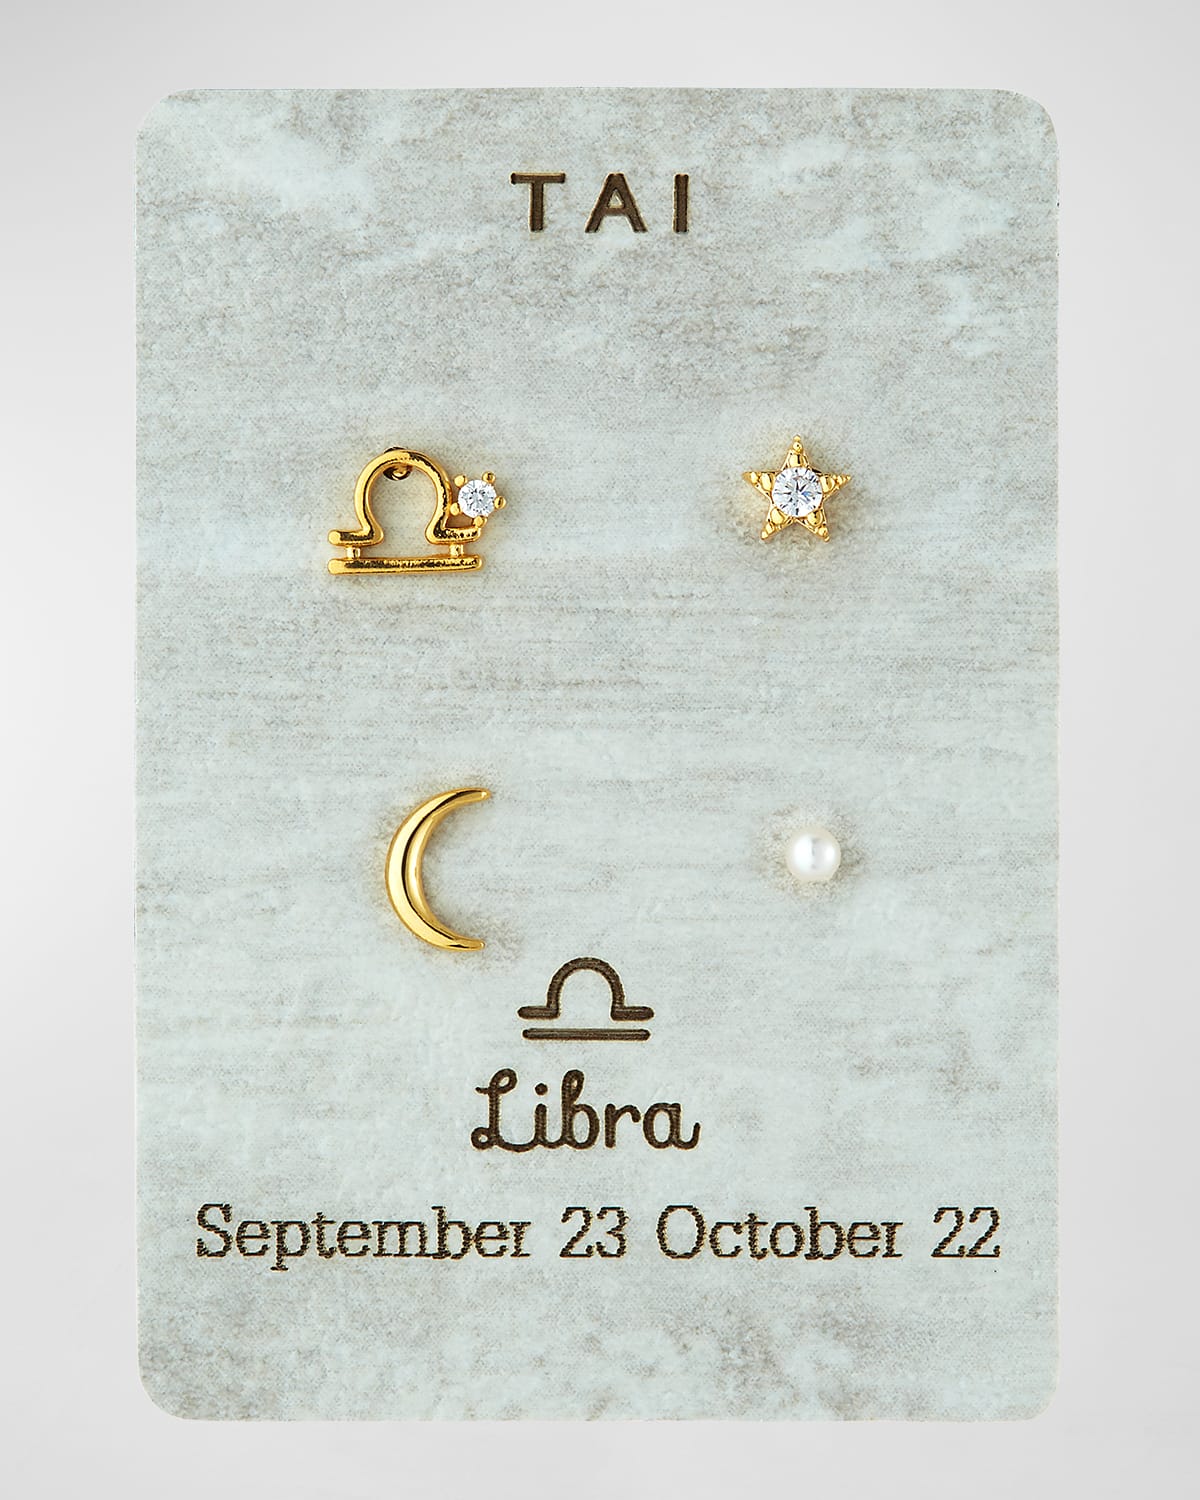 Tai Zodiac Earring Set In Libra